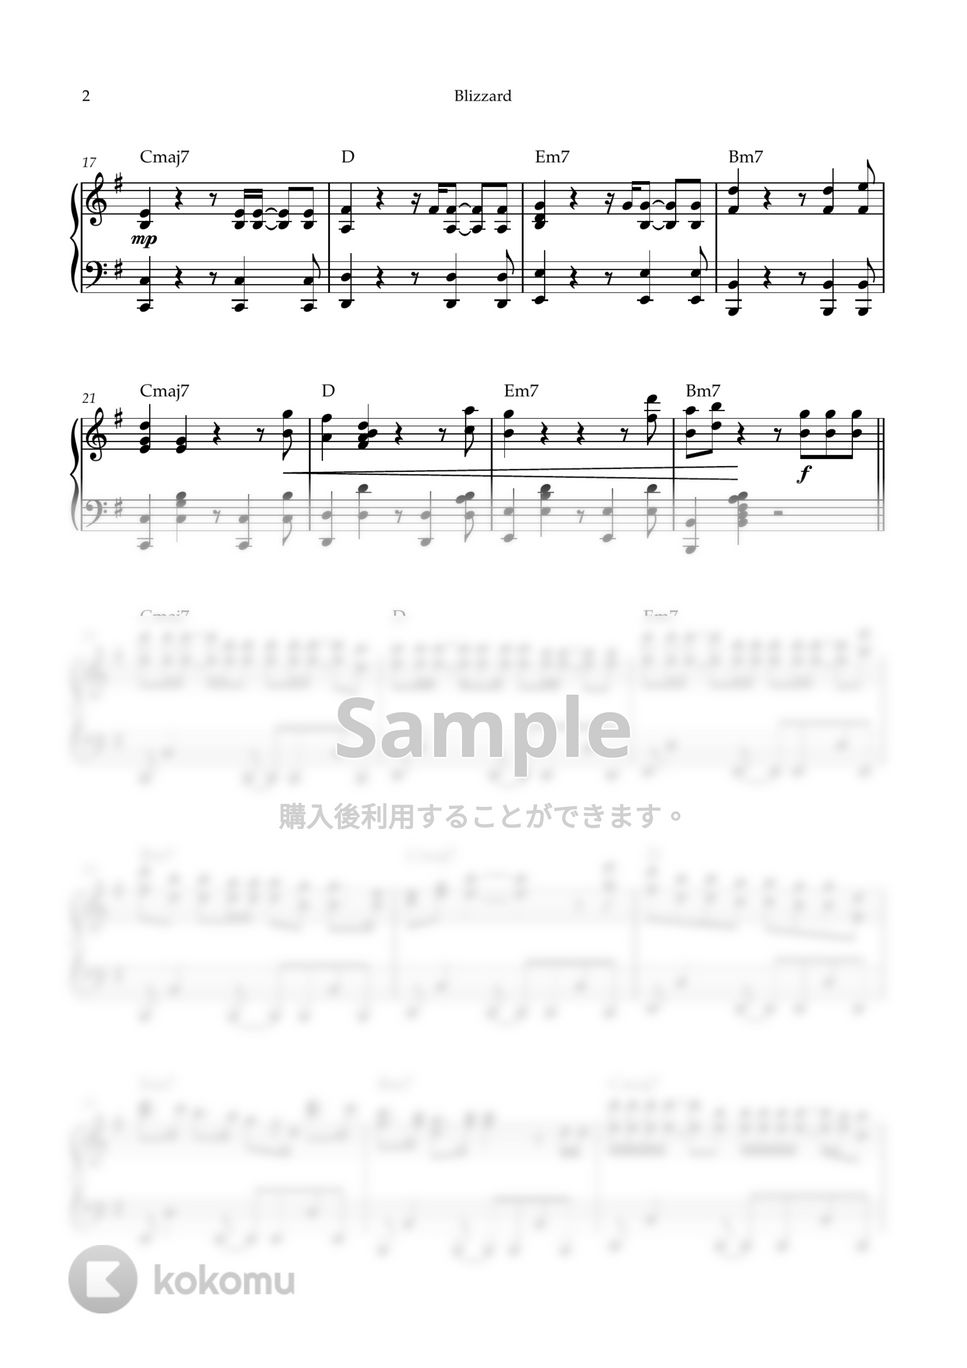 Mrs. GREEN APPLE - Blizzard(中級) (ピアノソロ/ANTENNA) by kanapiano